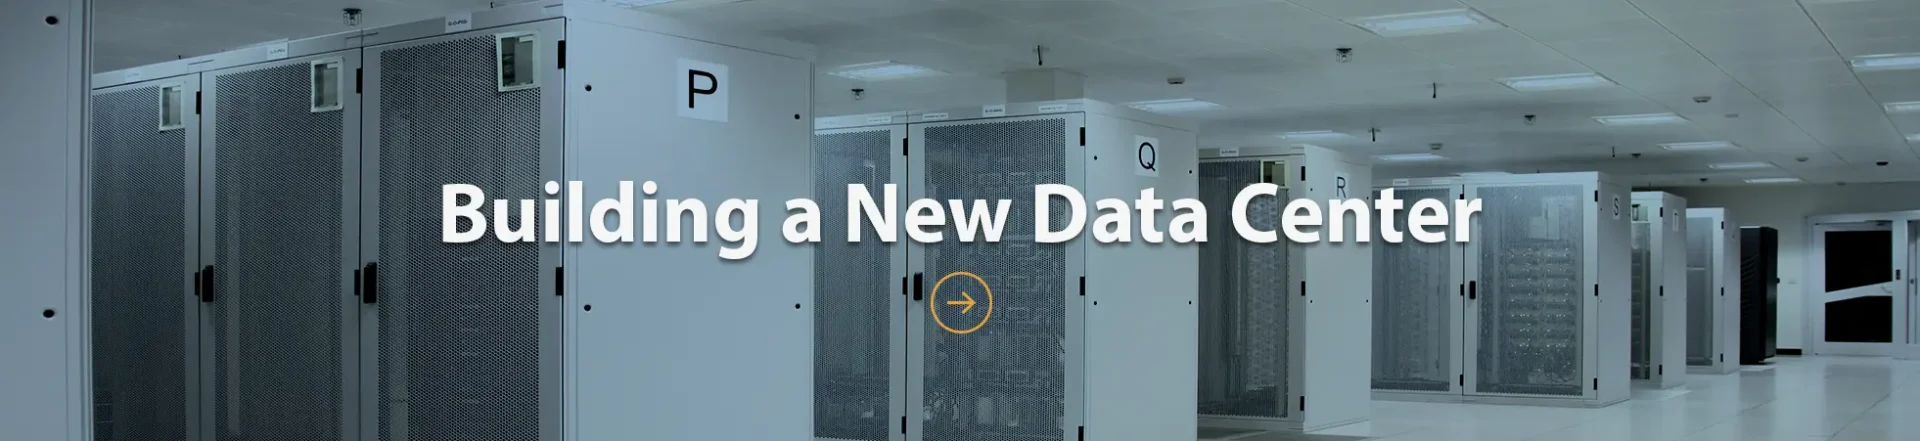 Building new: Server room in data center - dark